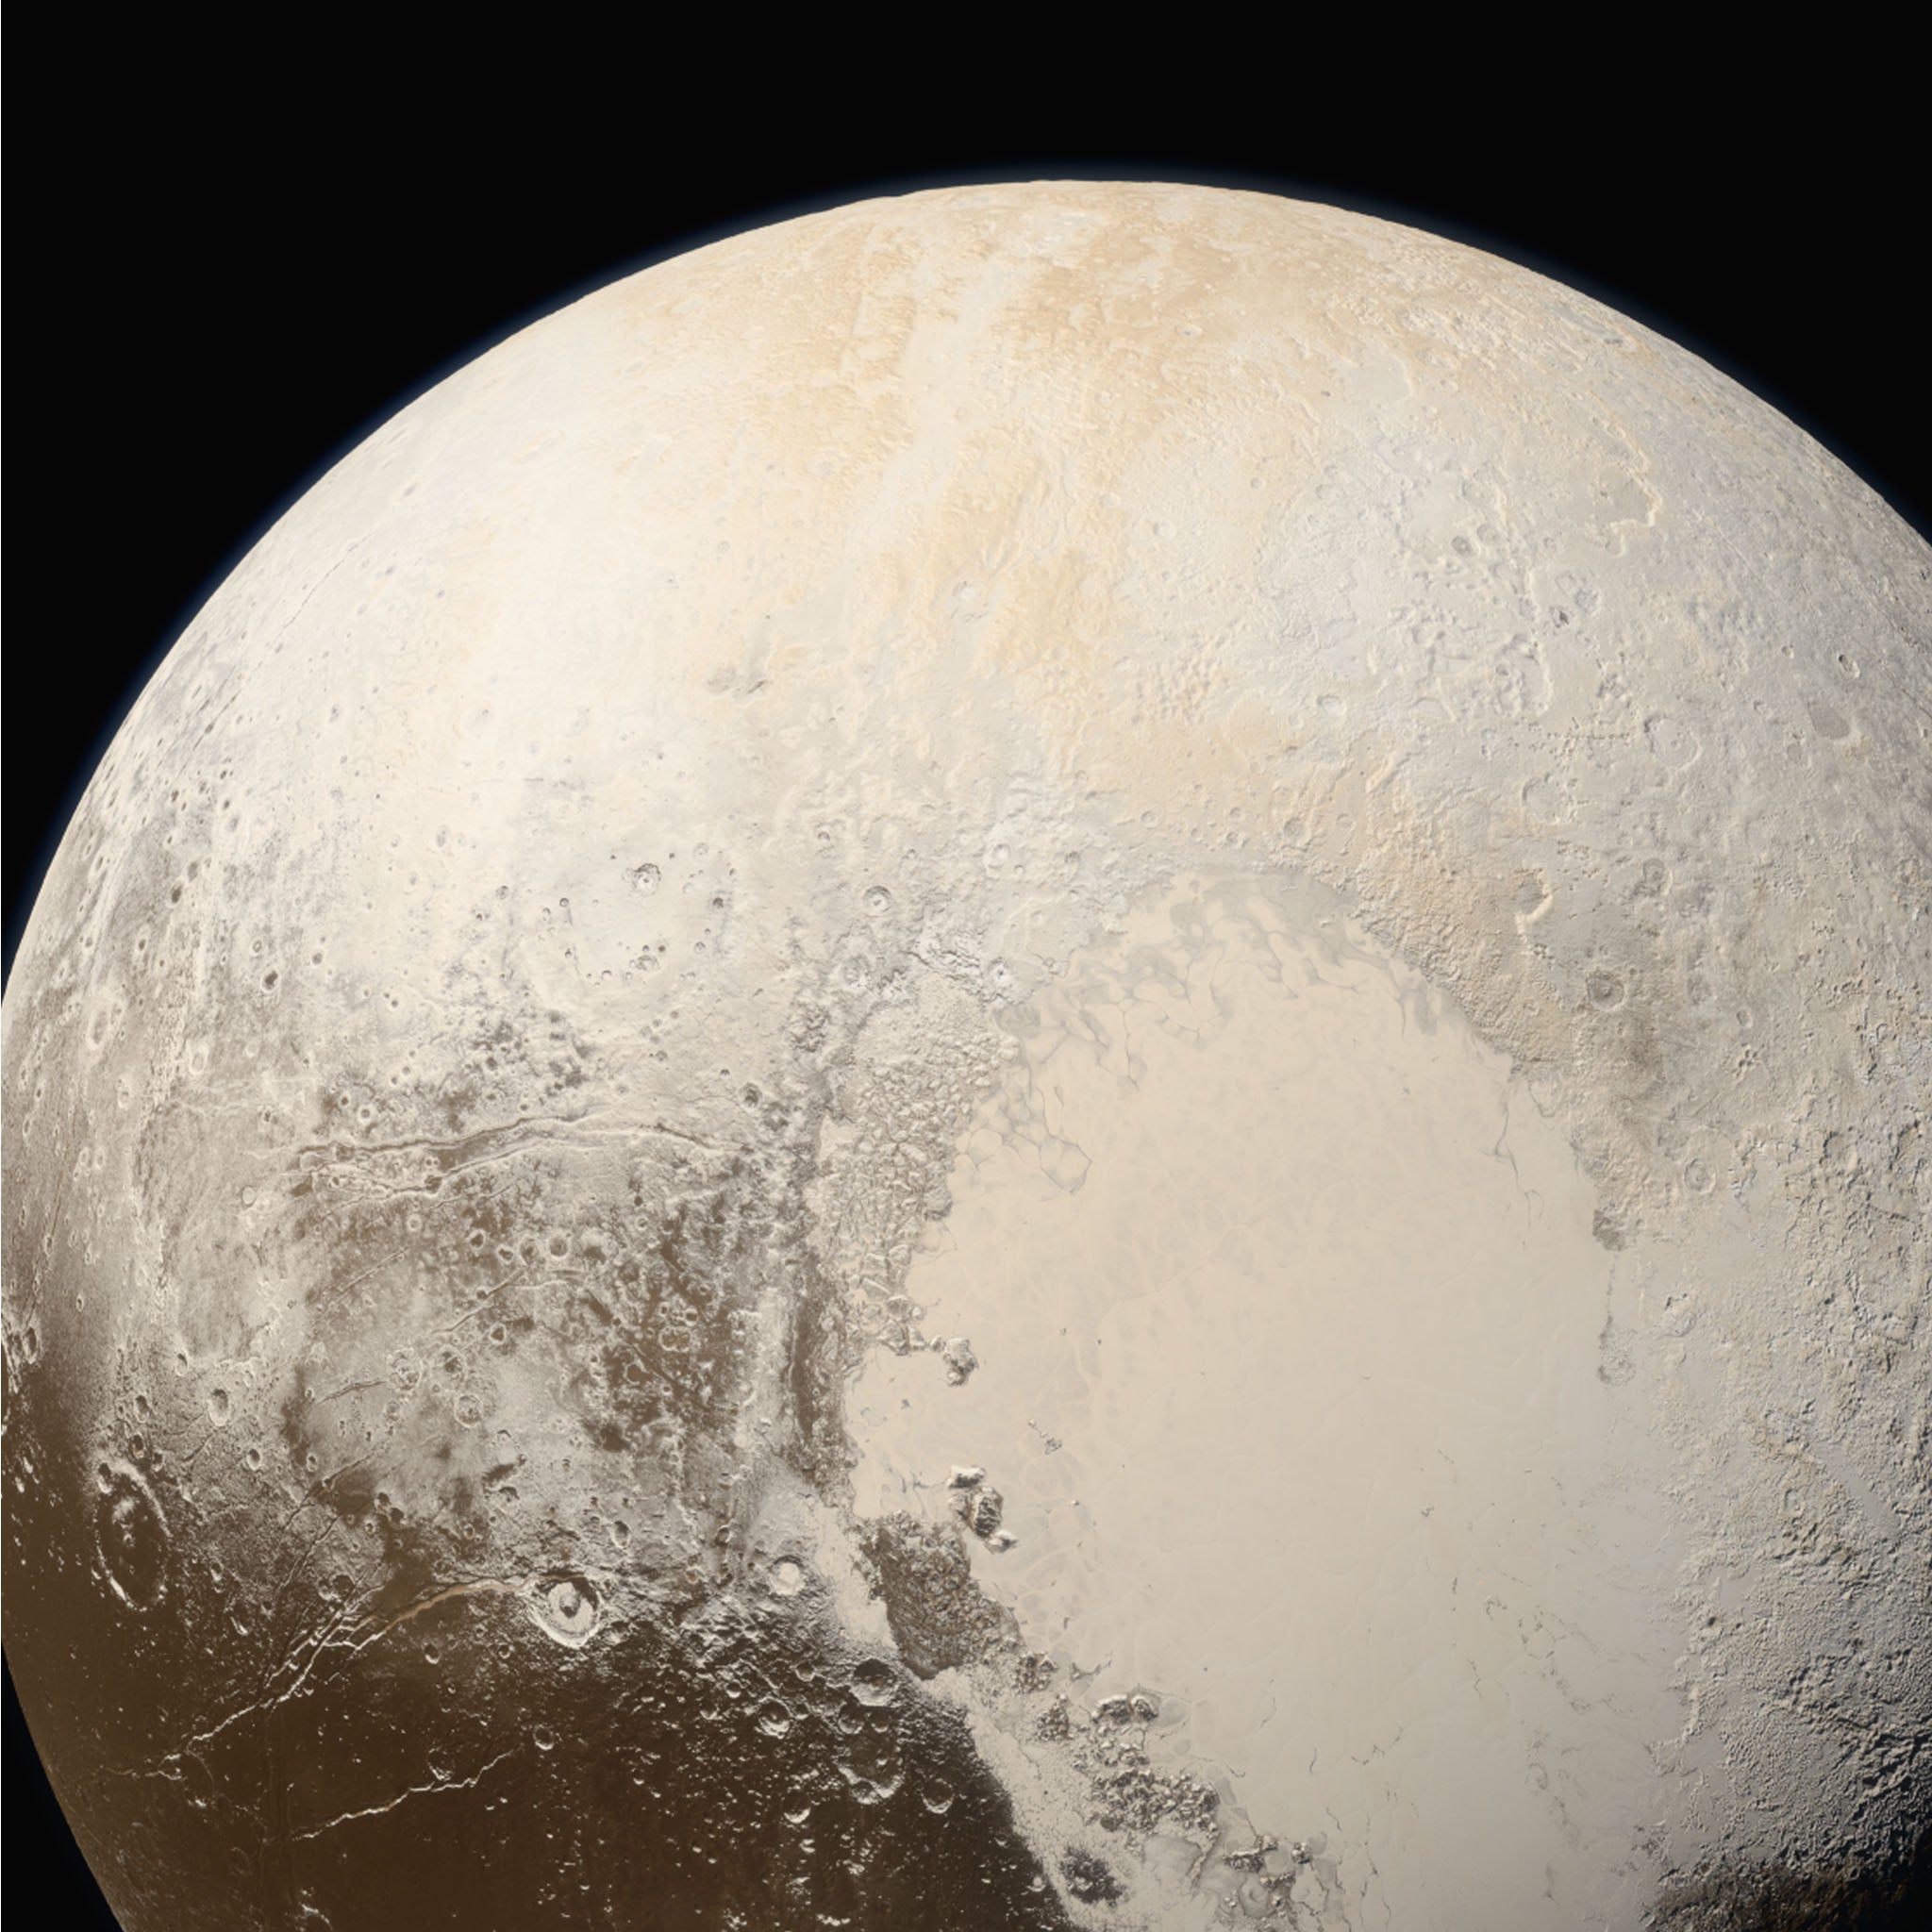 Heart of Pluto